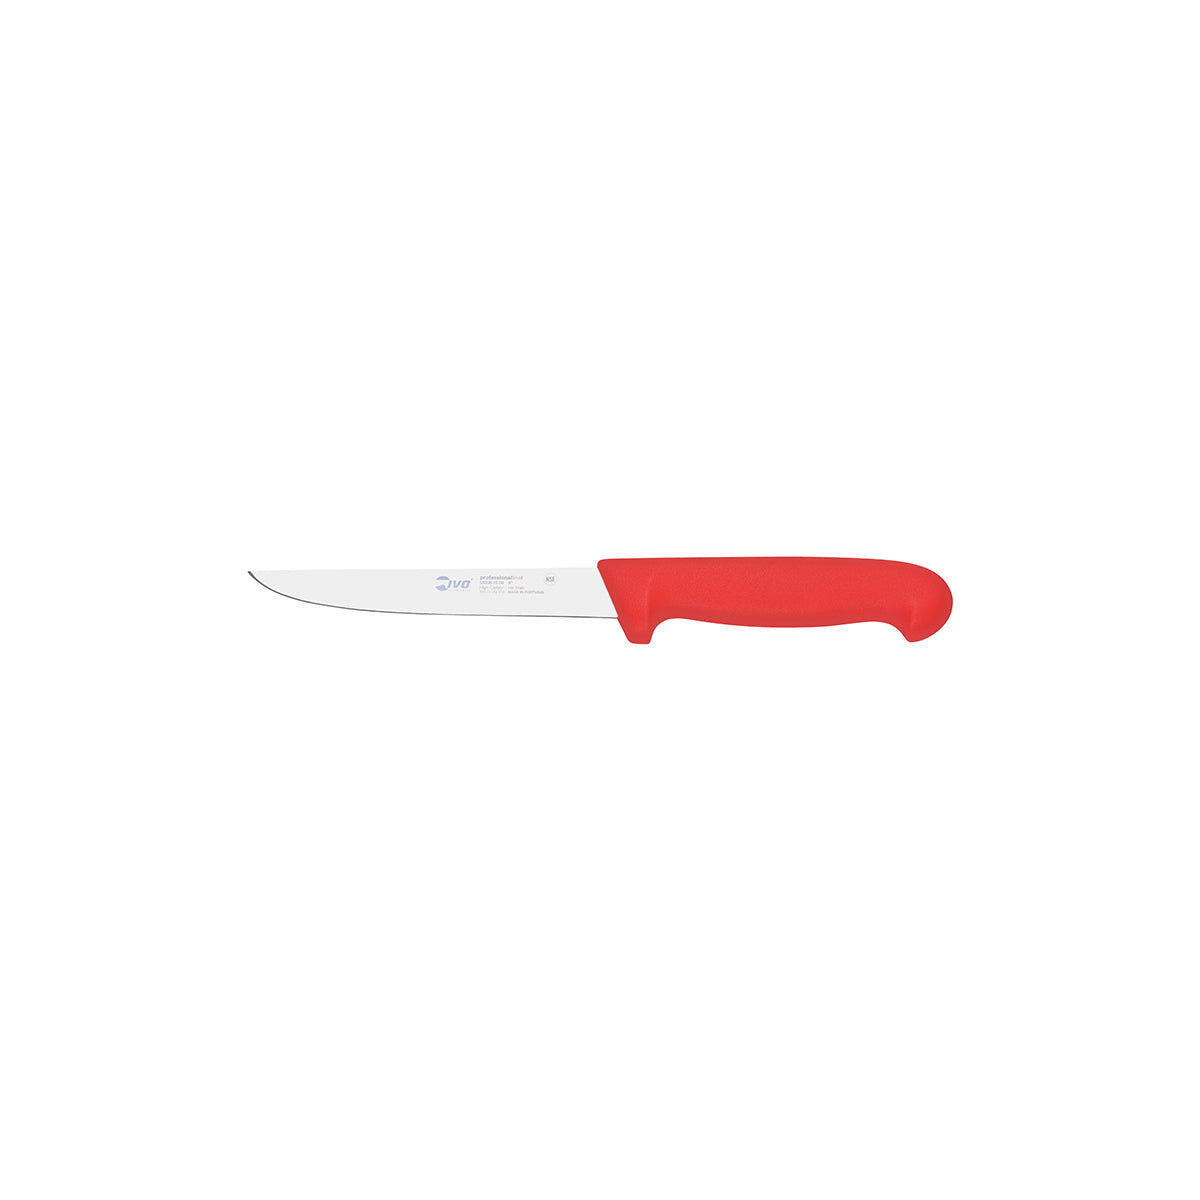 25465 Ivo Professional Line I Boning Knife Red 150mm Tomkin Australia Hospitality Supplies